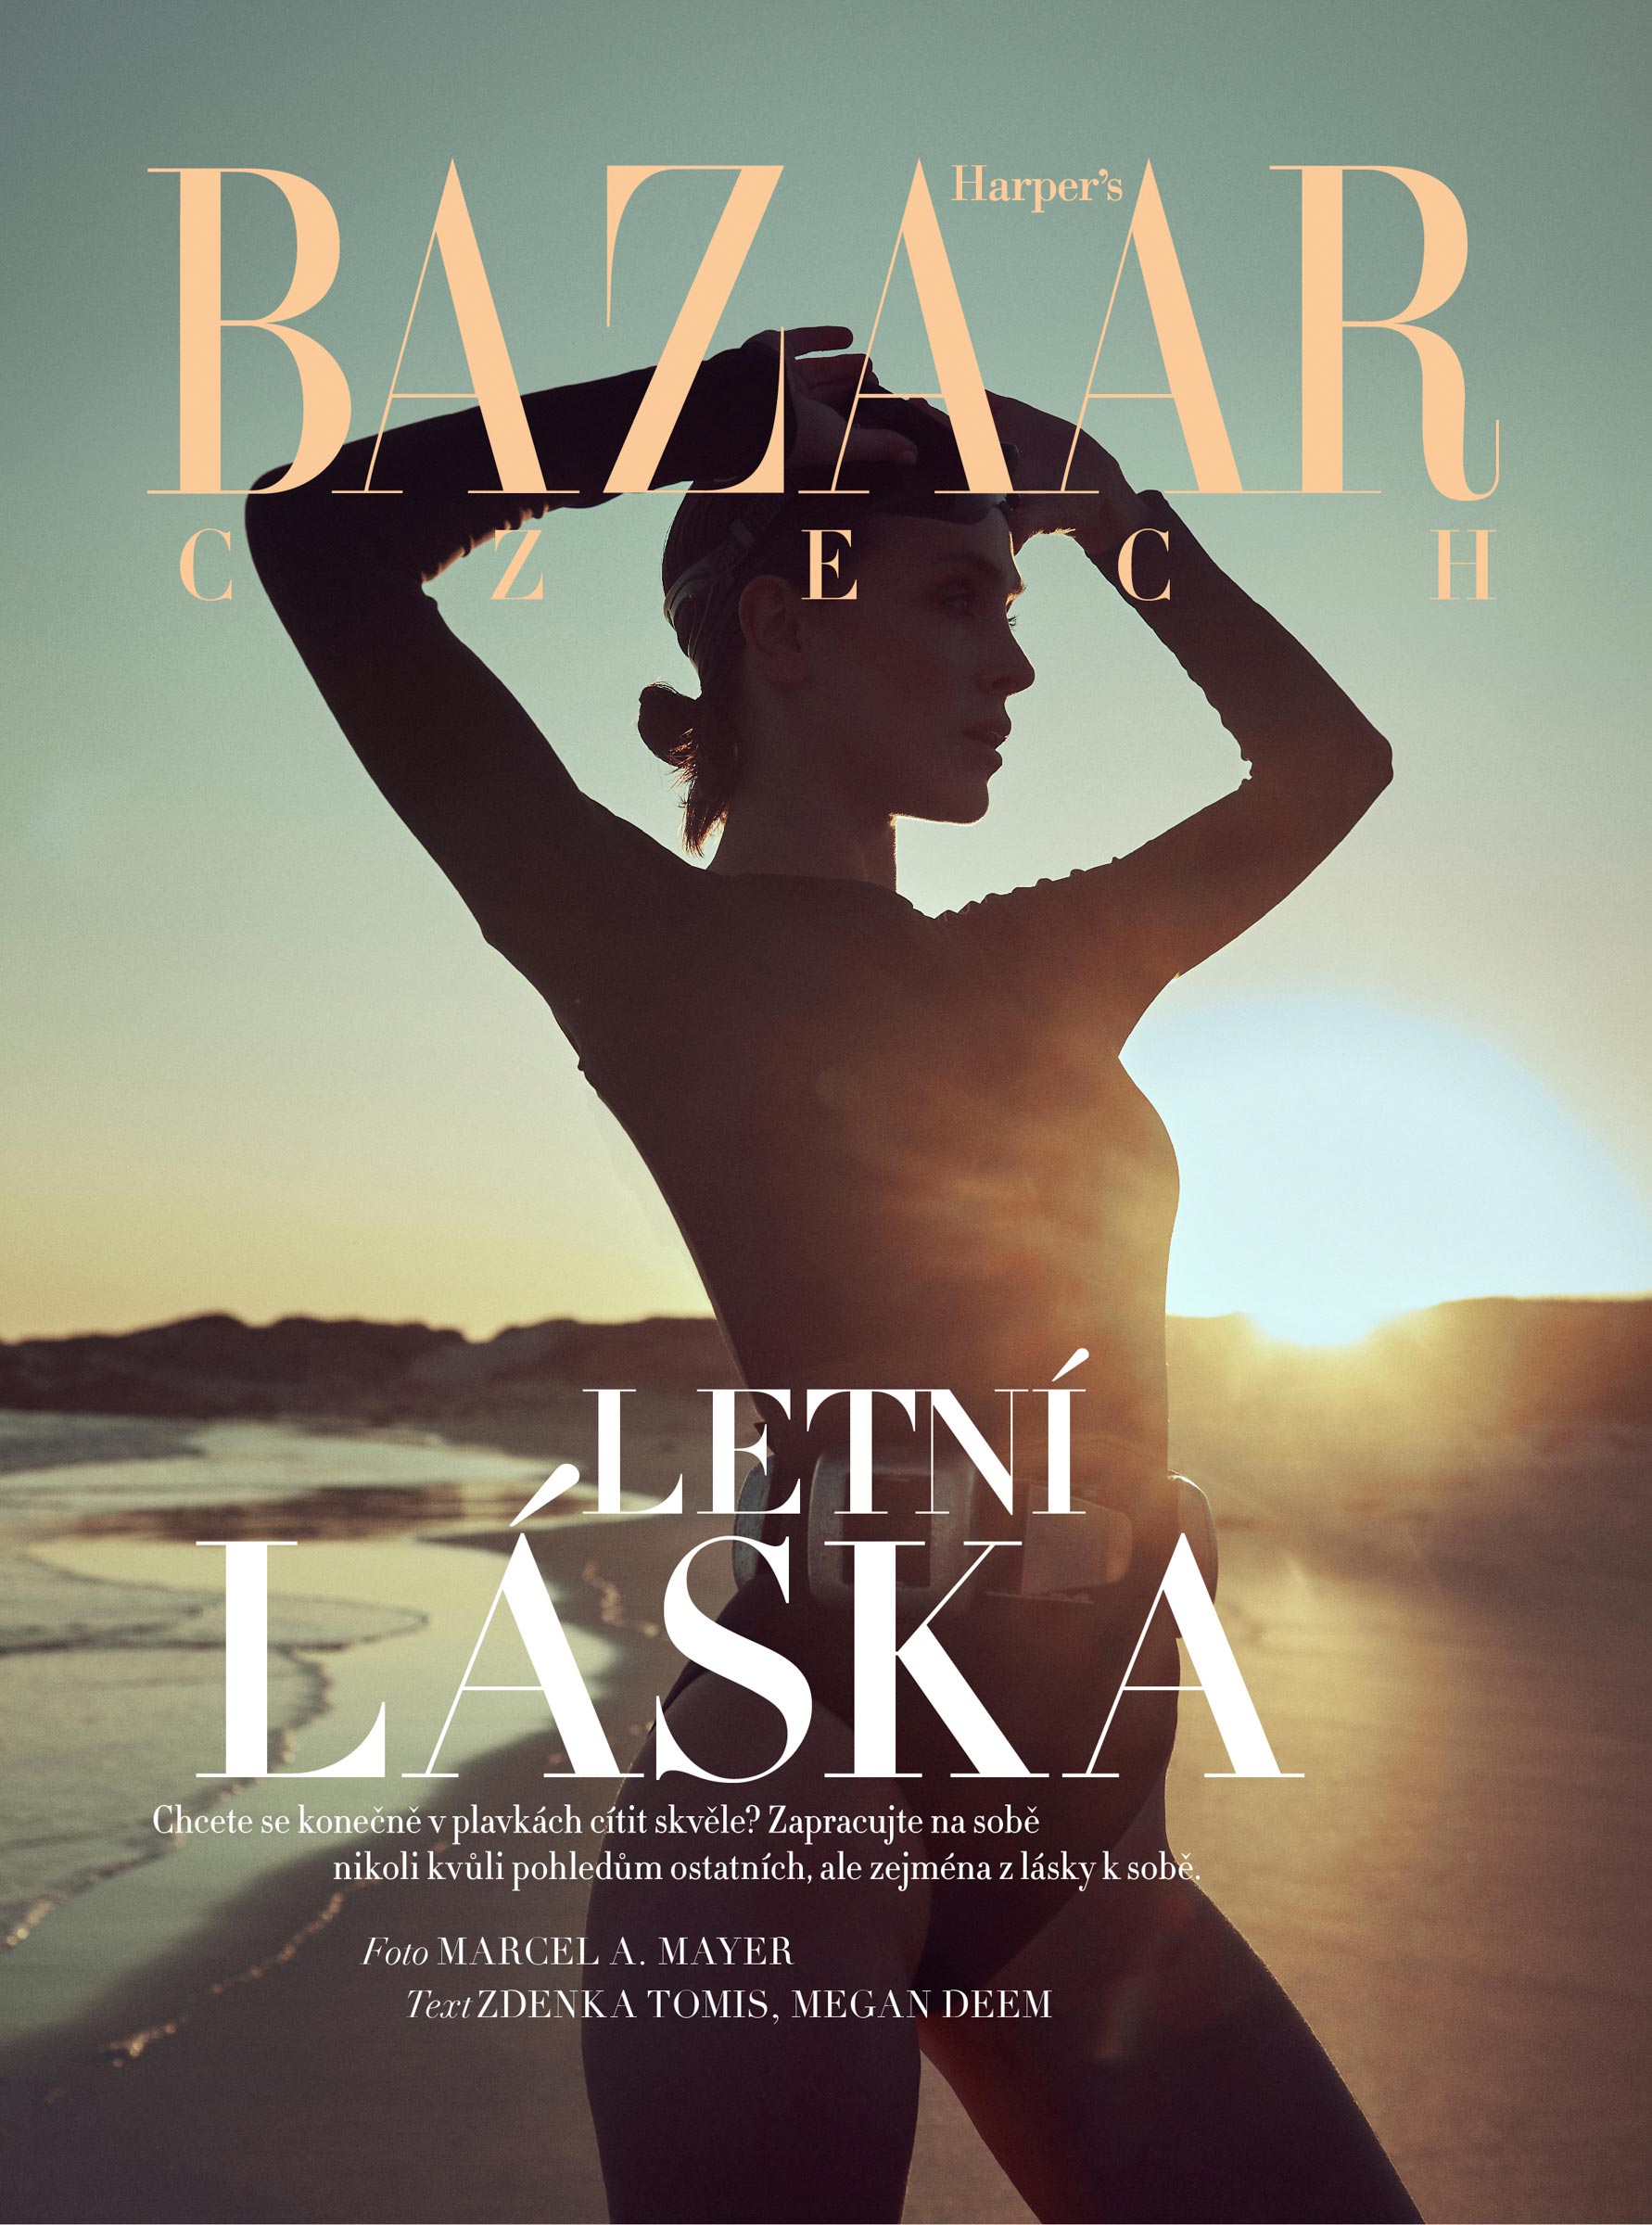 Harper's Bazaar czech Fashion magazin cover